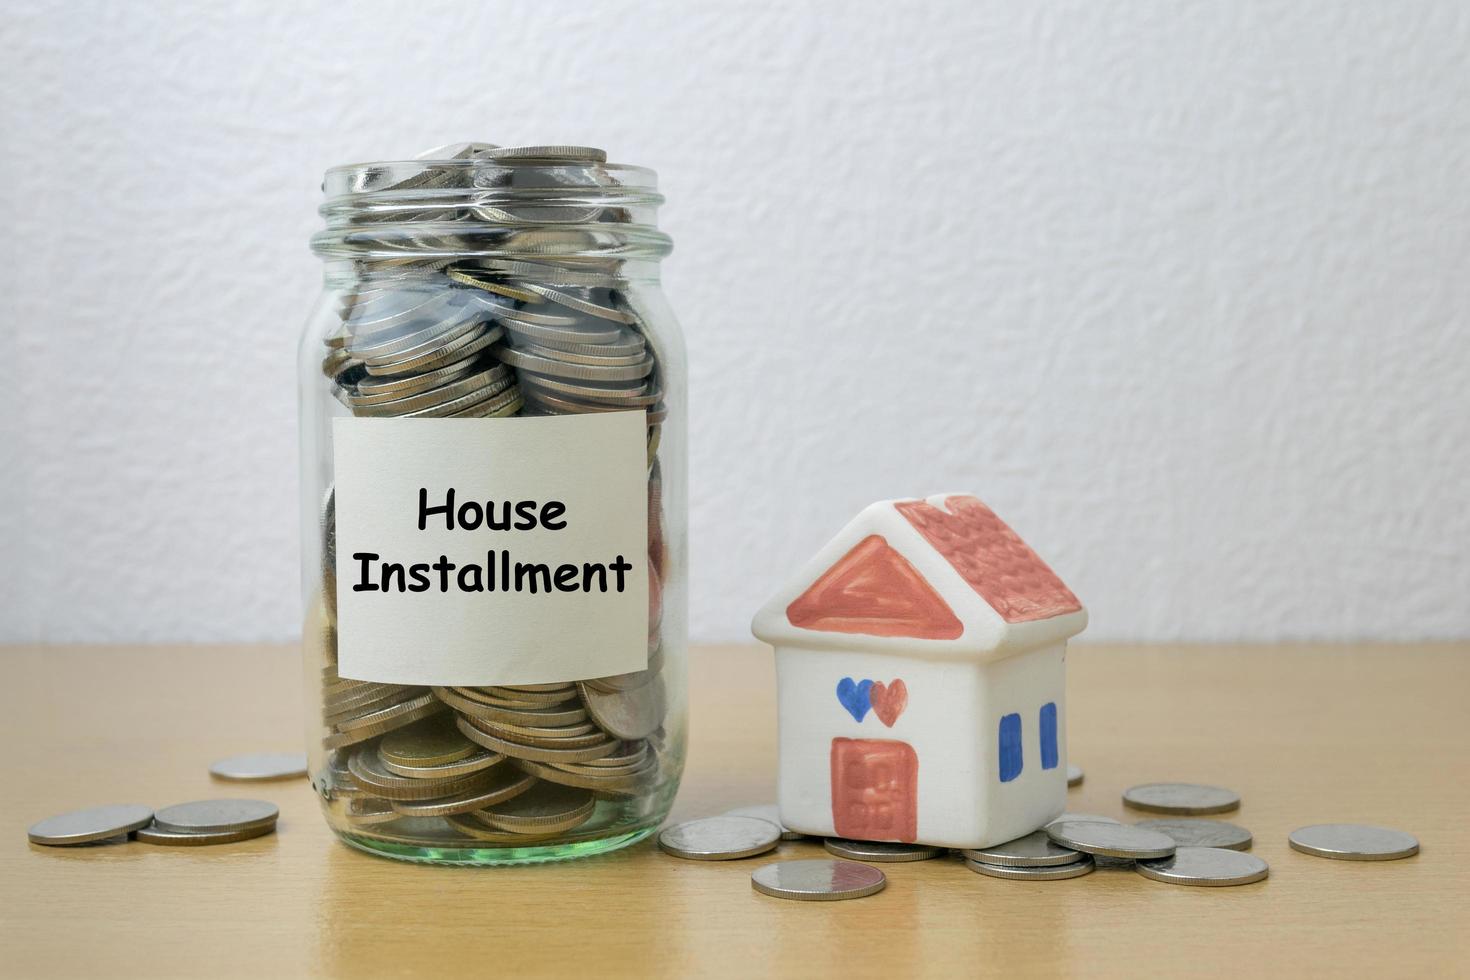 Money saving for house installment in the glass bottle photo